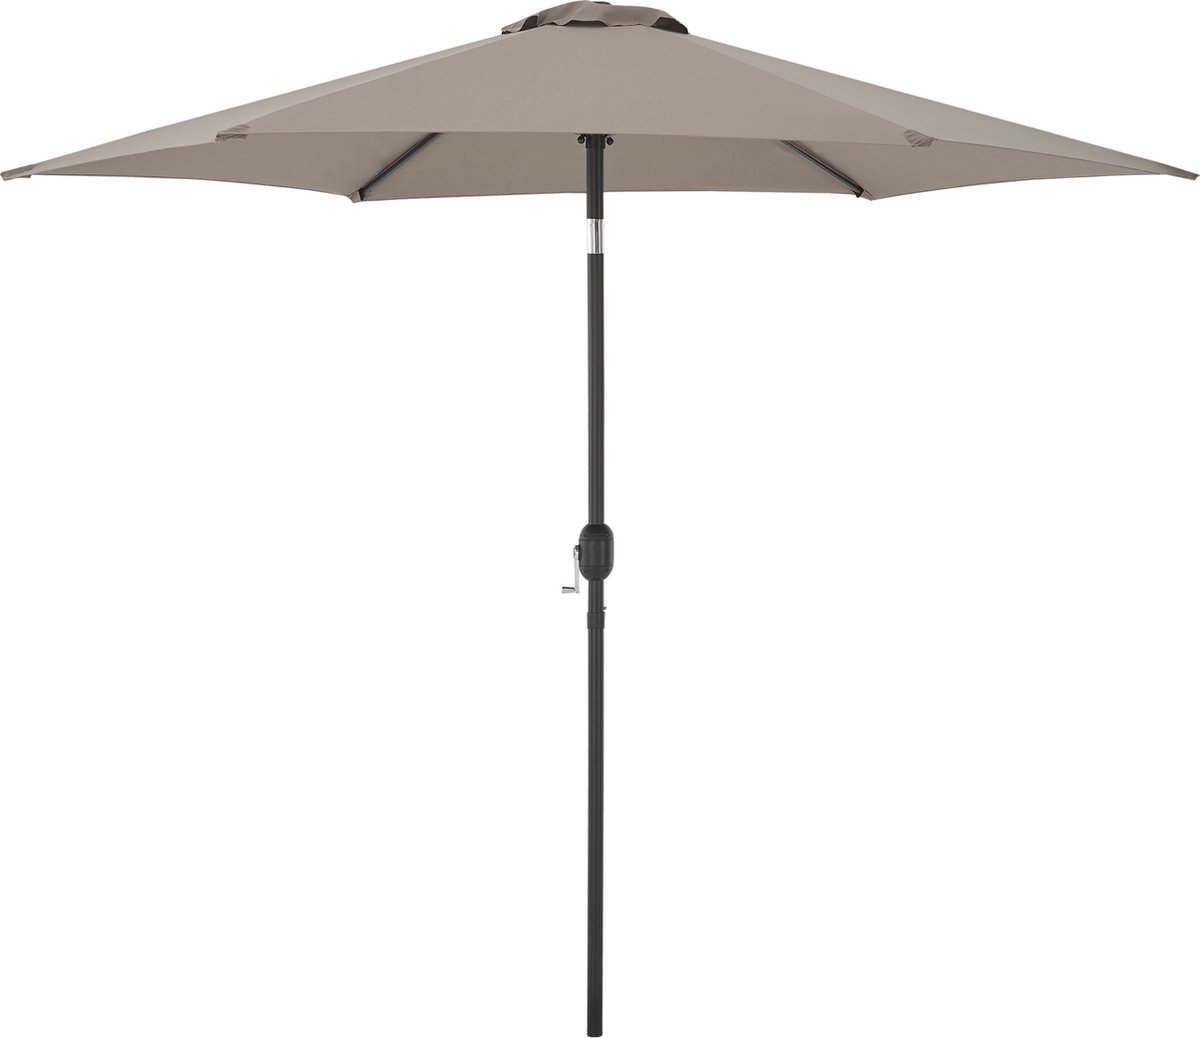 Tuin parasol Altino stokparasol Ø270x235 cm kaki